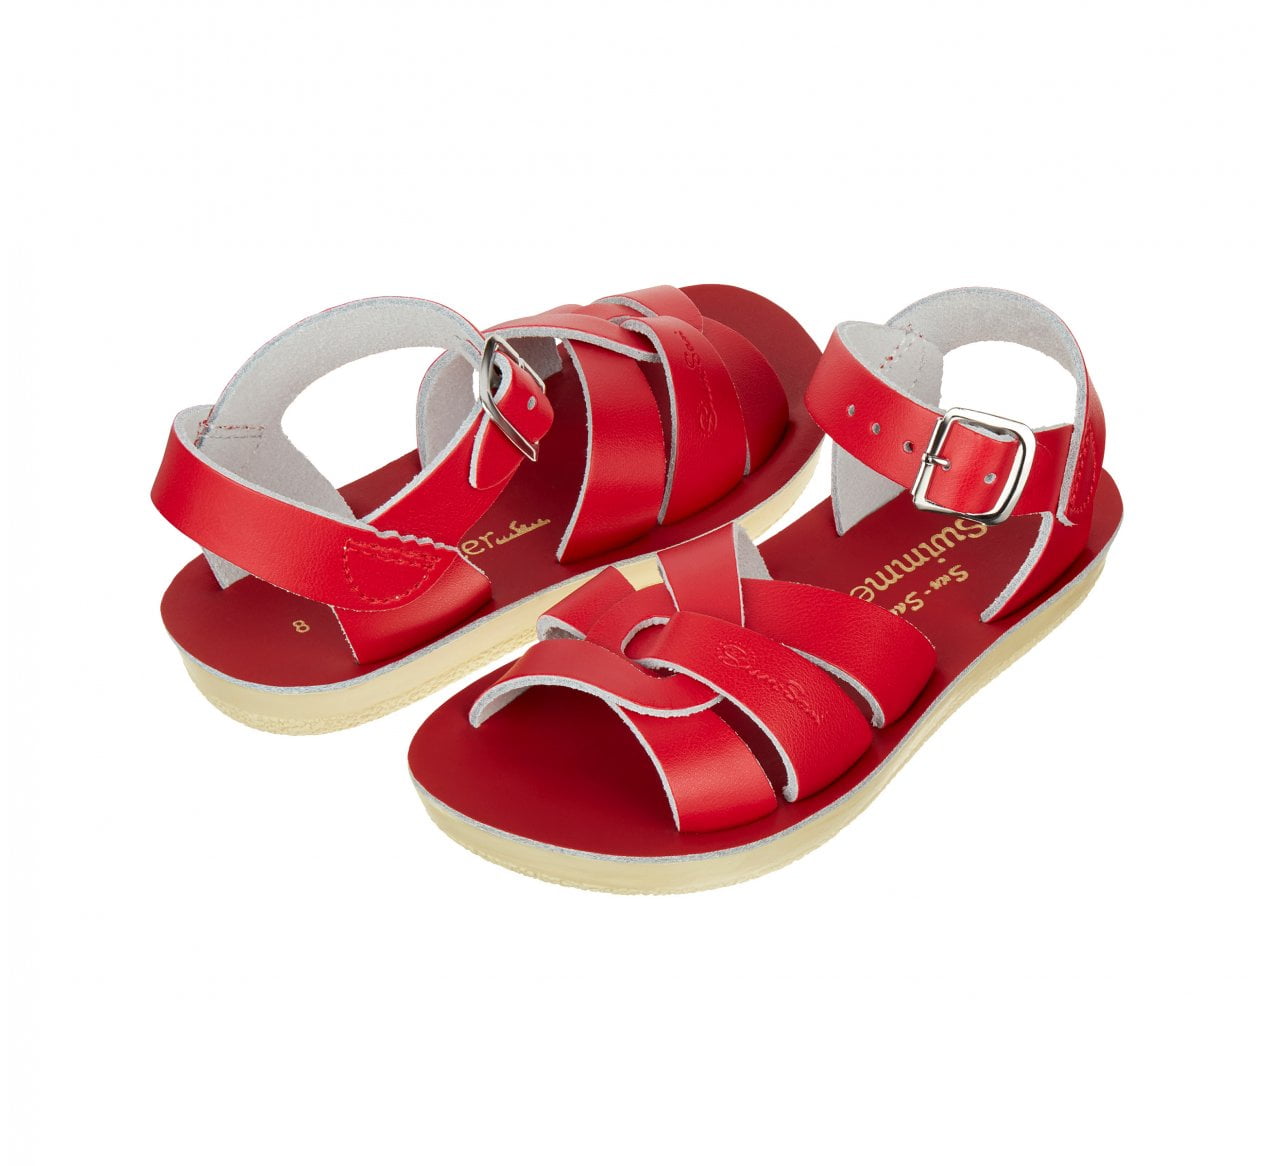 swimmer rood salt water sandals sun san